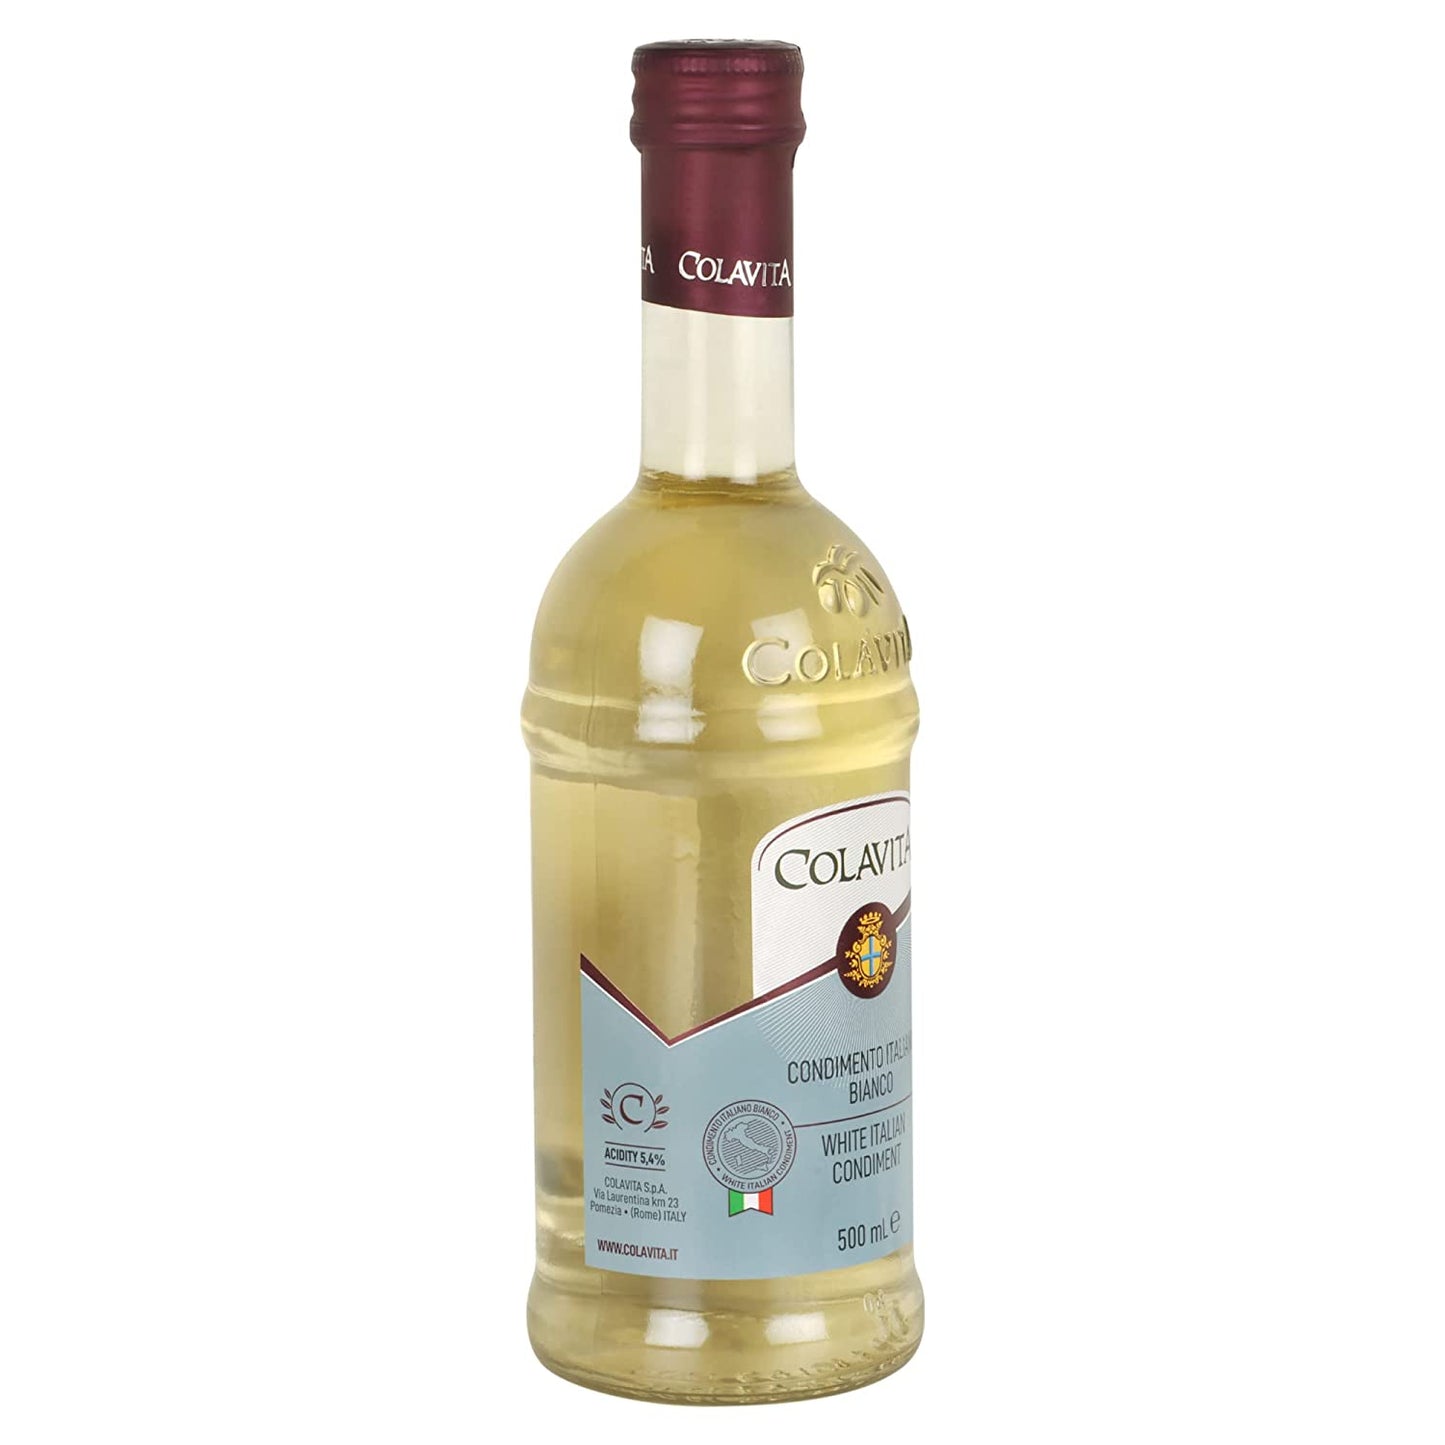 
                  
                    Colavita White Italian Condiment (Balsamic Vinegar) 500 ml
                  
                